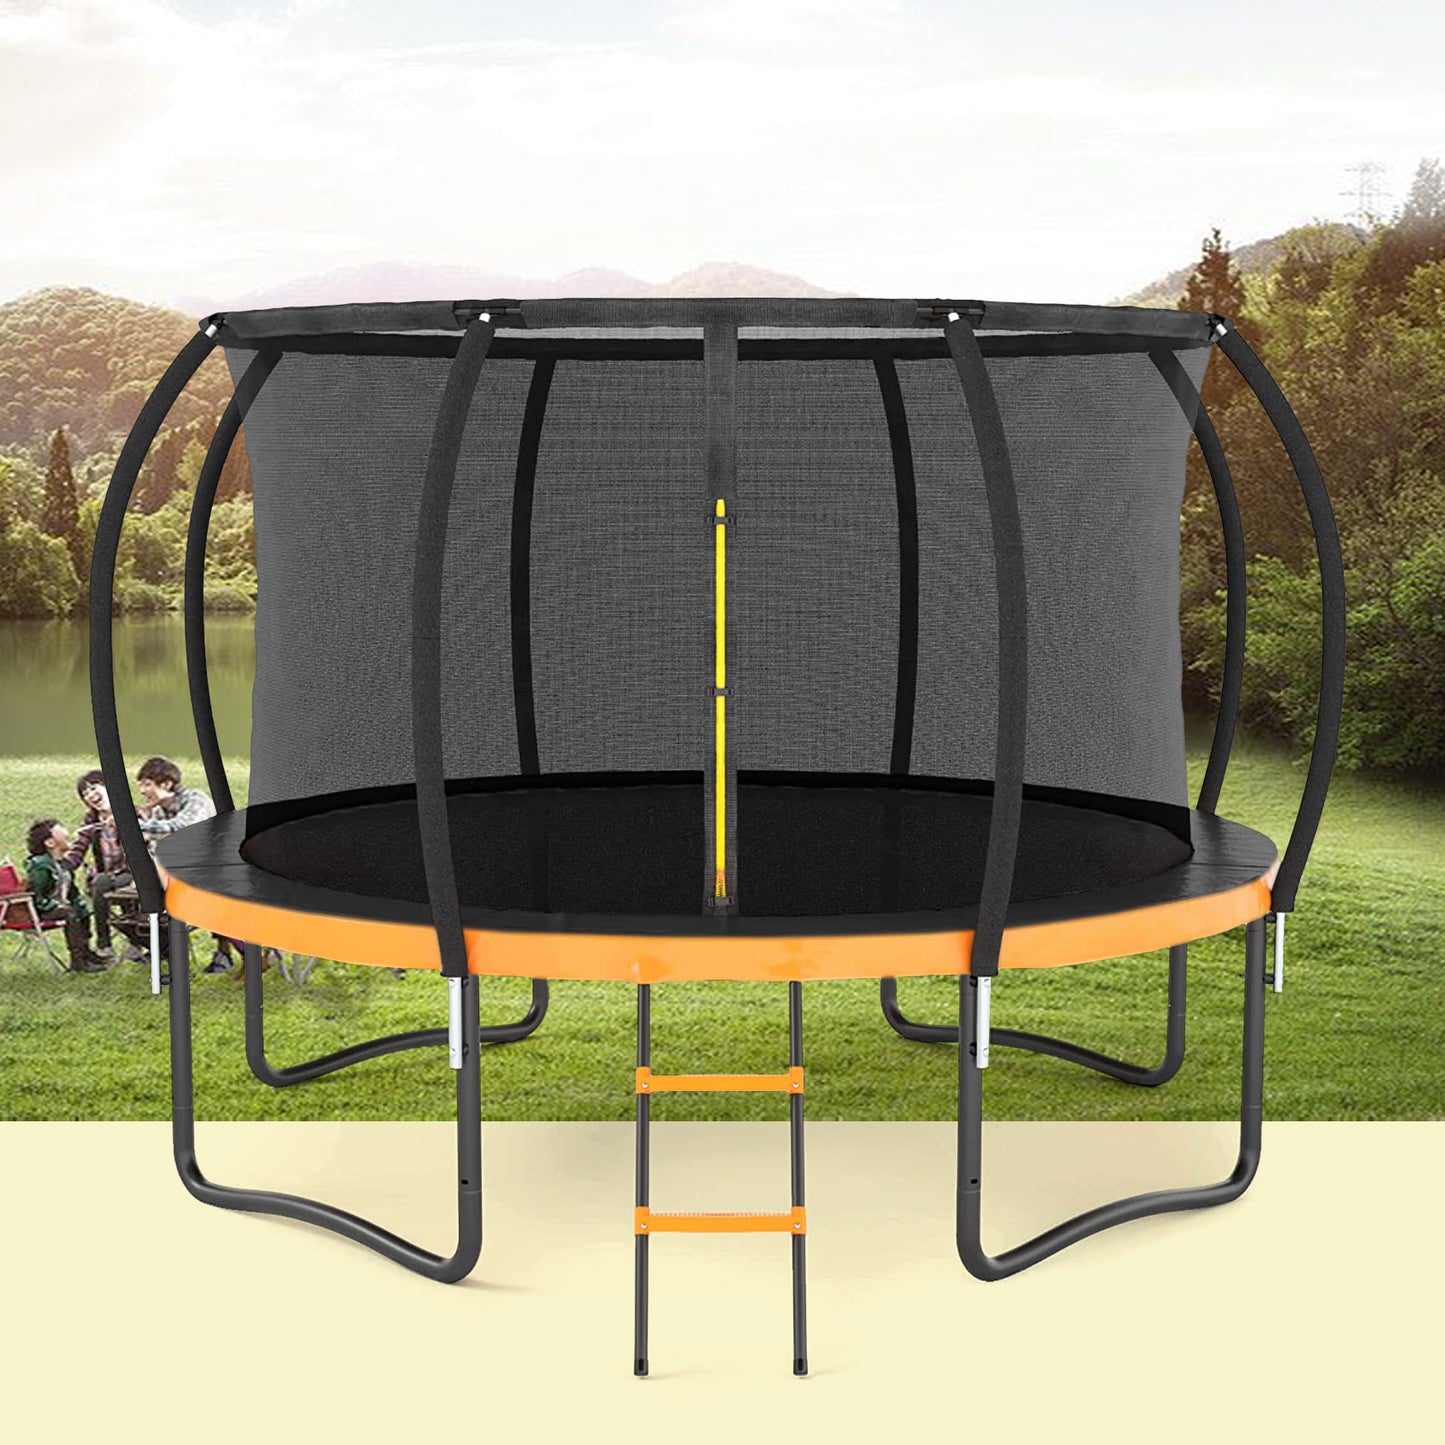 14FT Outdoor Big Trampoline With Inner Safety Enclosure Net, Ladder, PVC Spring Cover Padding, For Kids, Black&Orange Color